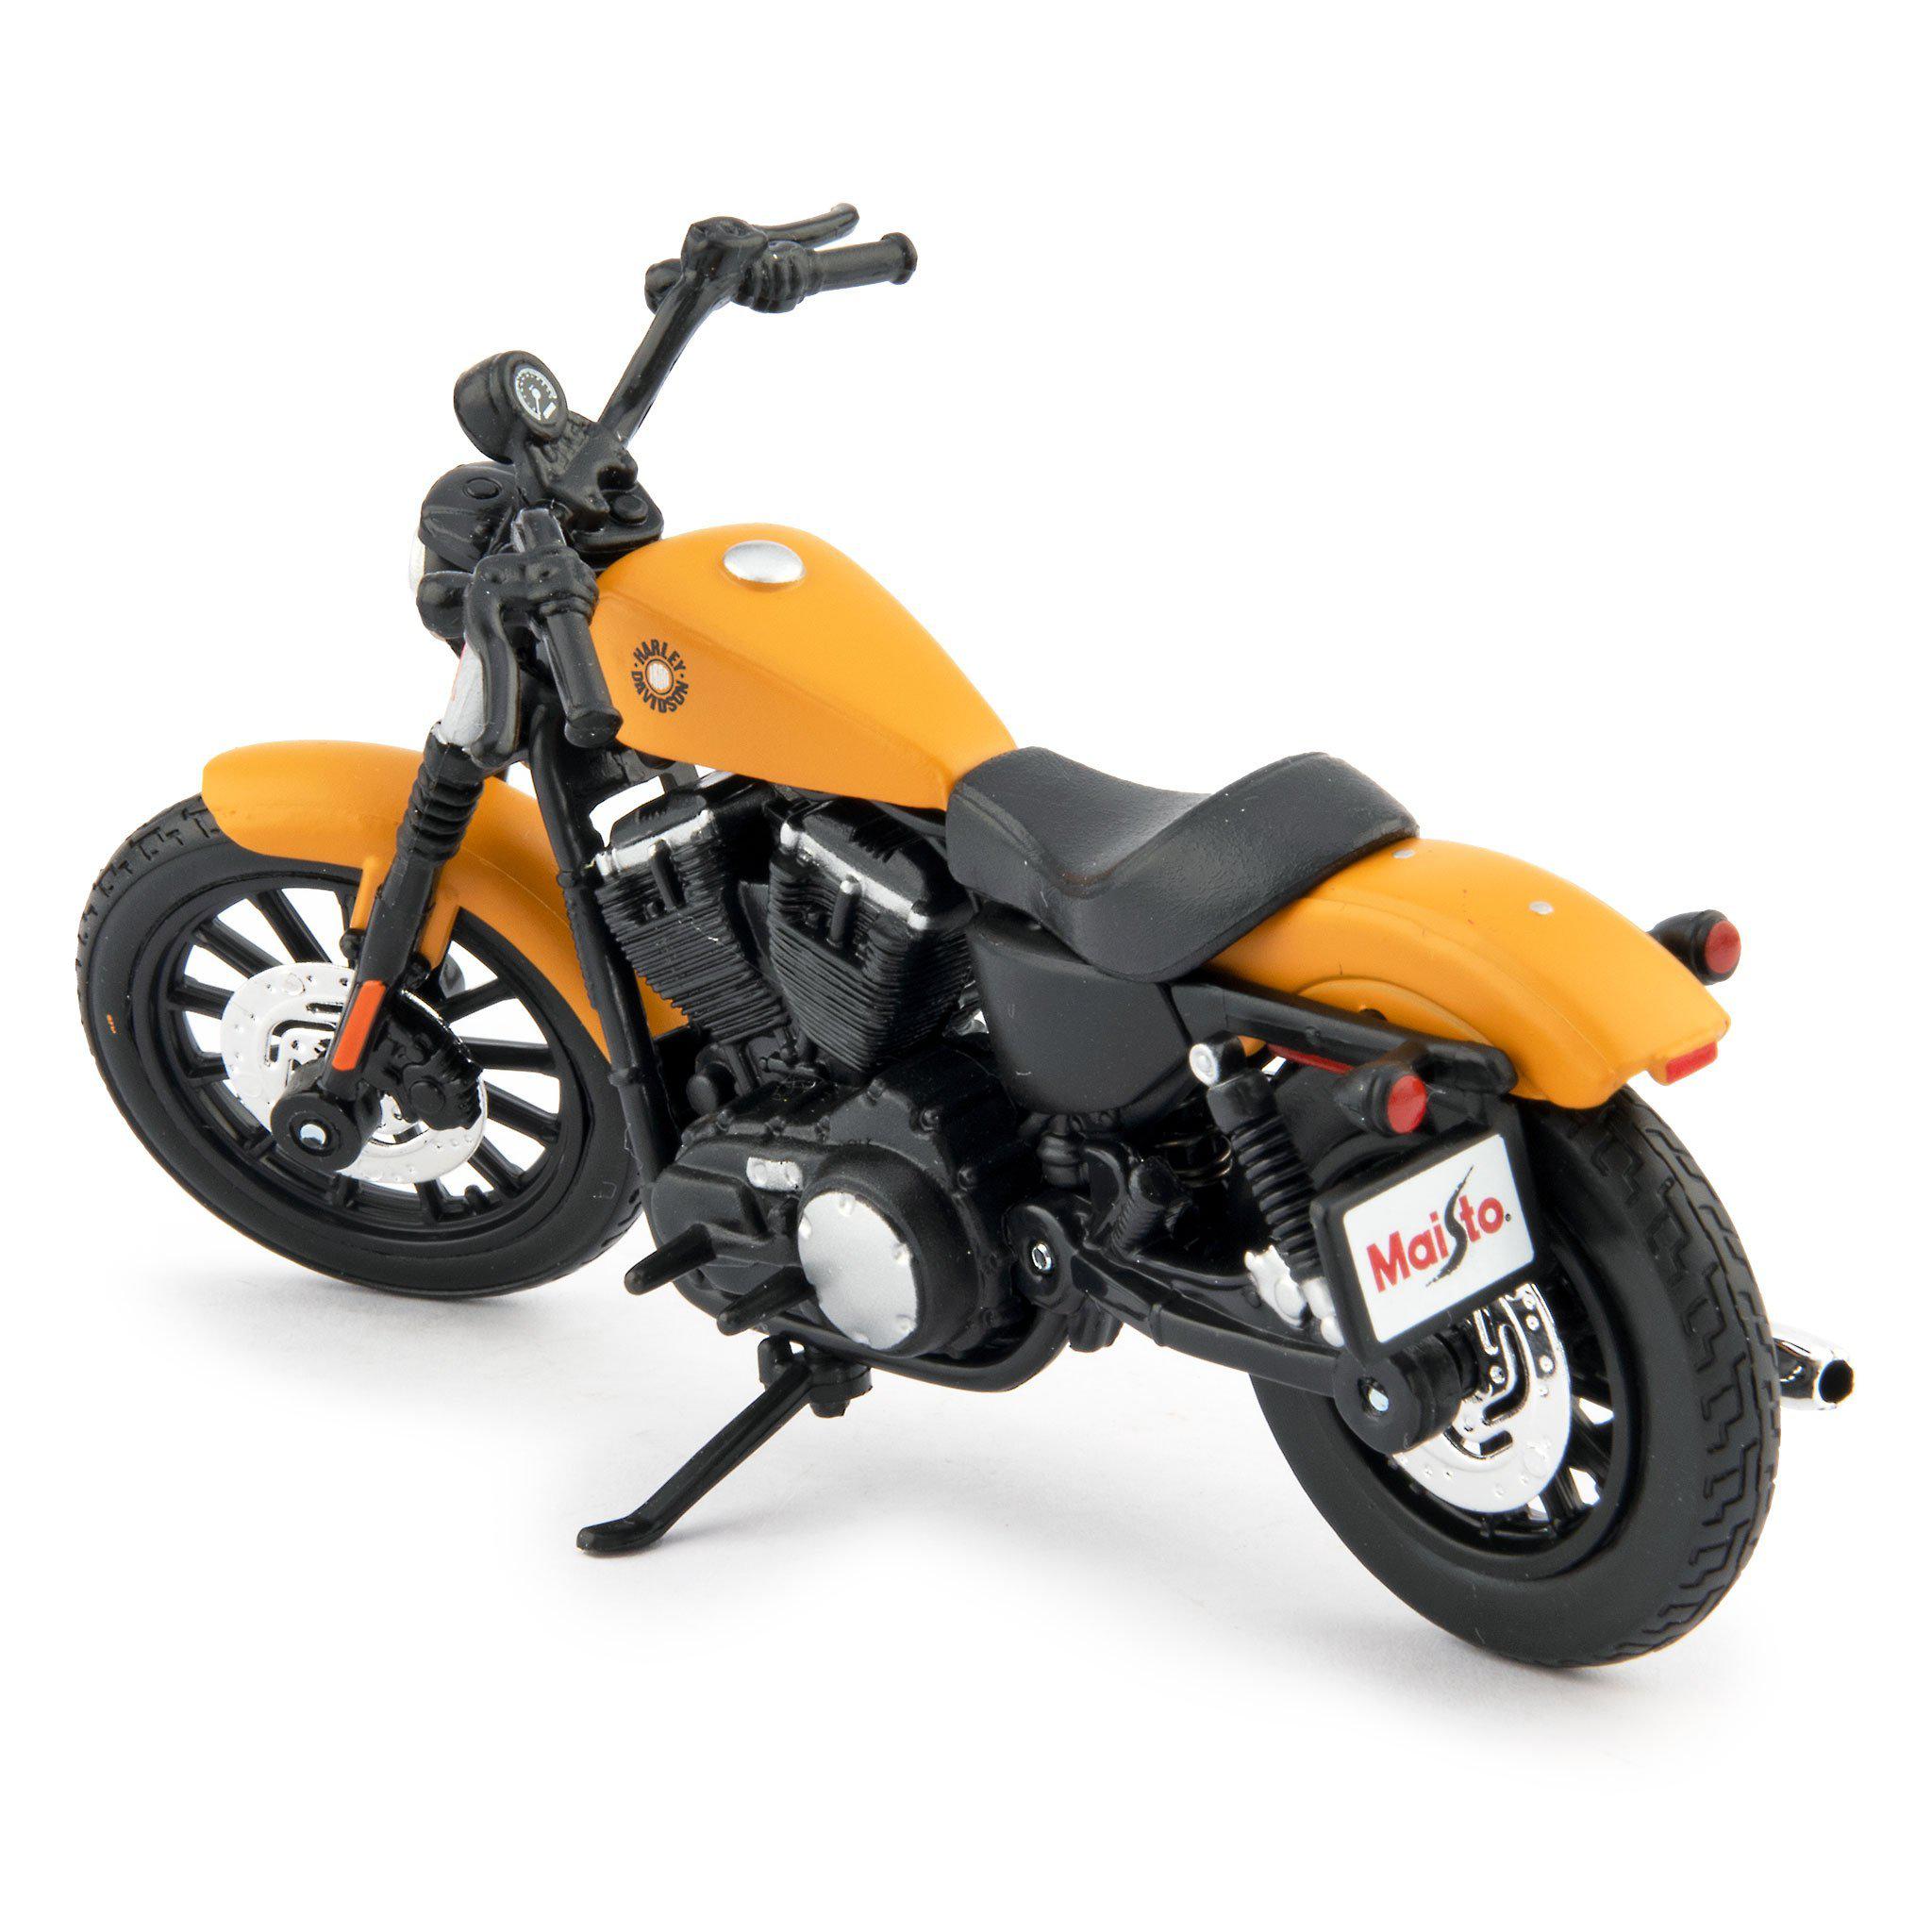 2014 Harley Davidson Sportster Iron 883 Motorcycle Model 1/12 by Maisto  32326 by Maisto